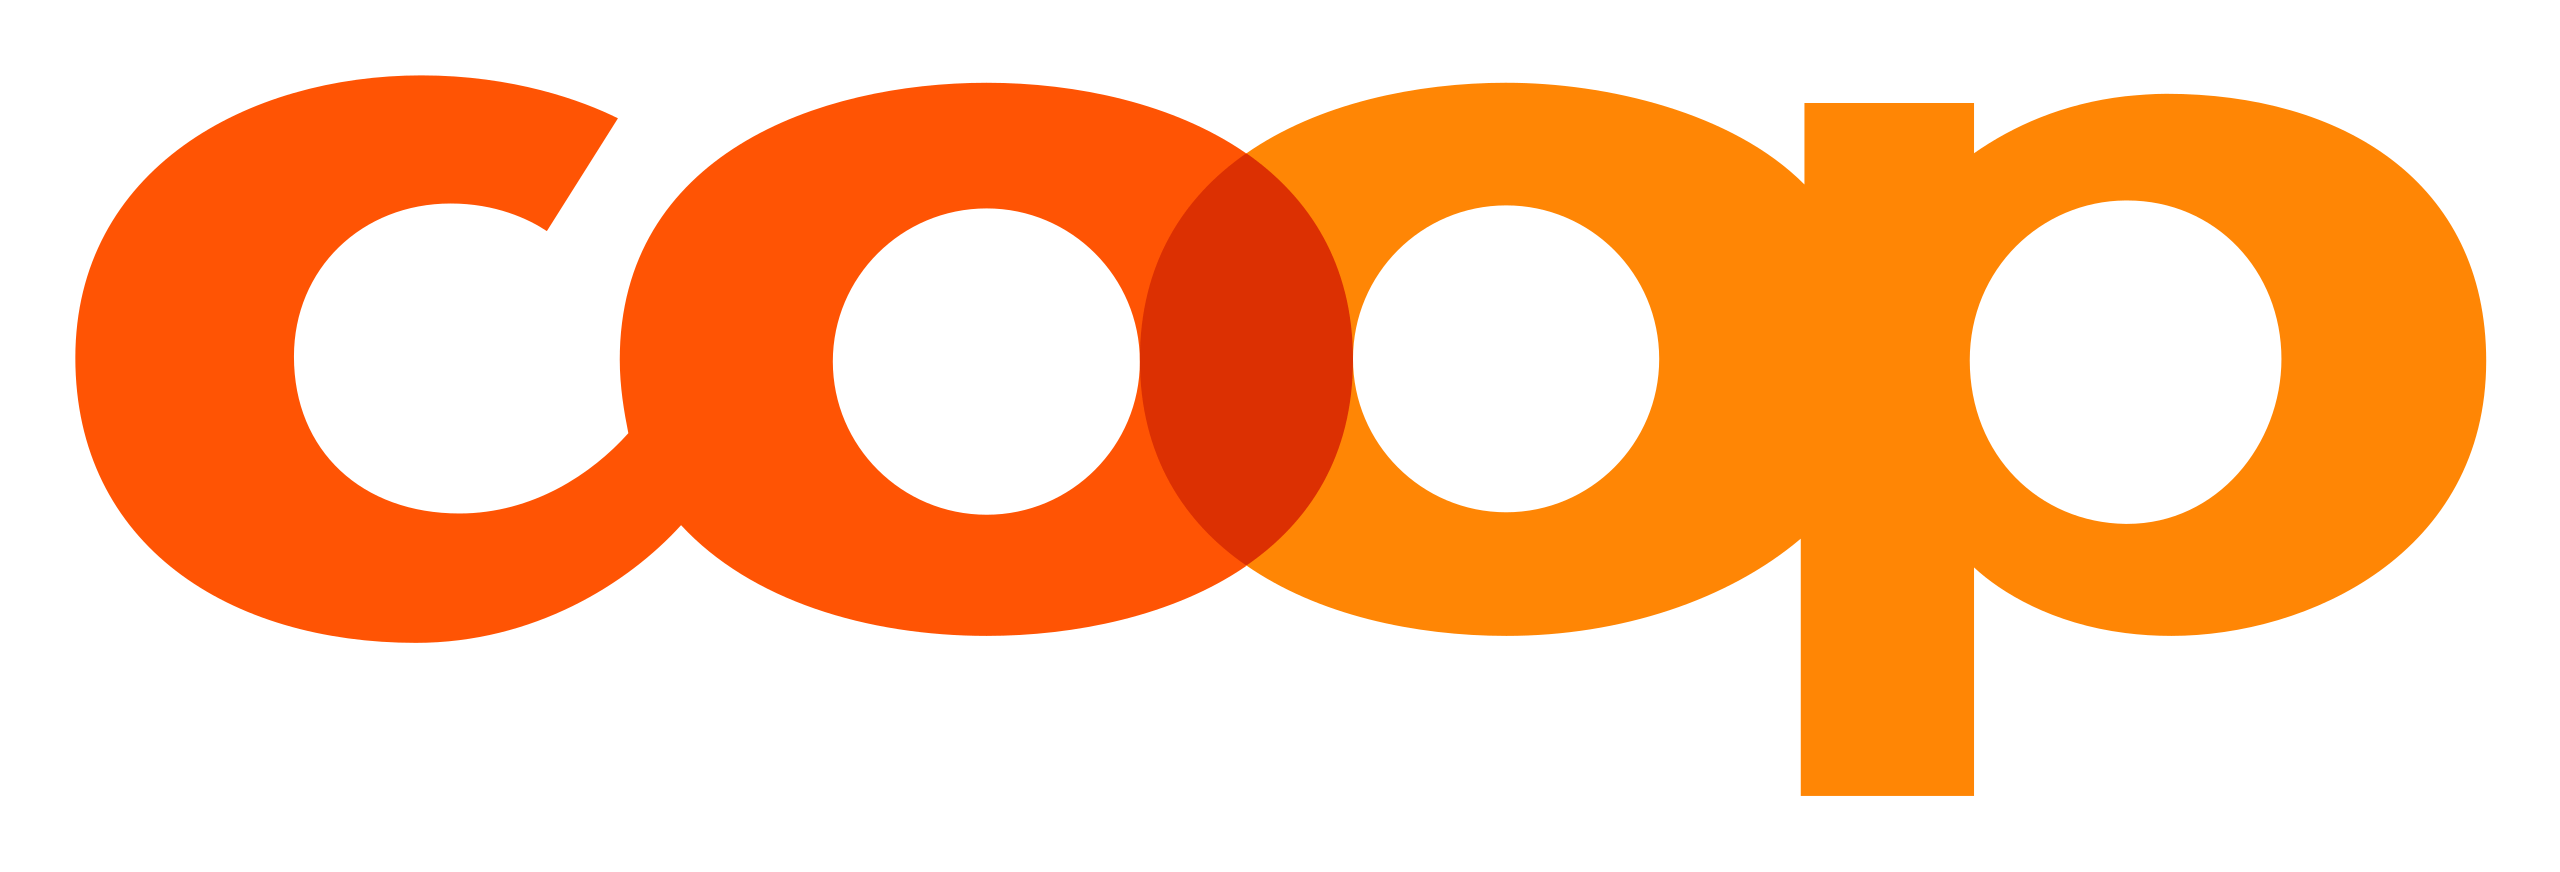 Coop Logo